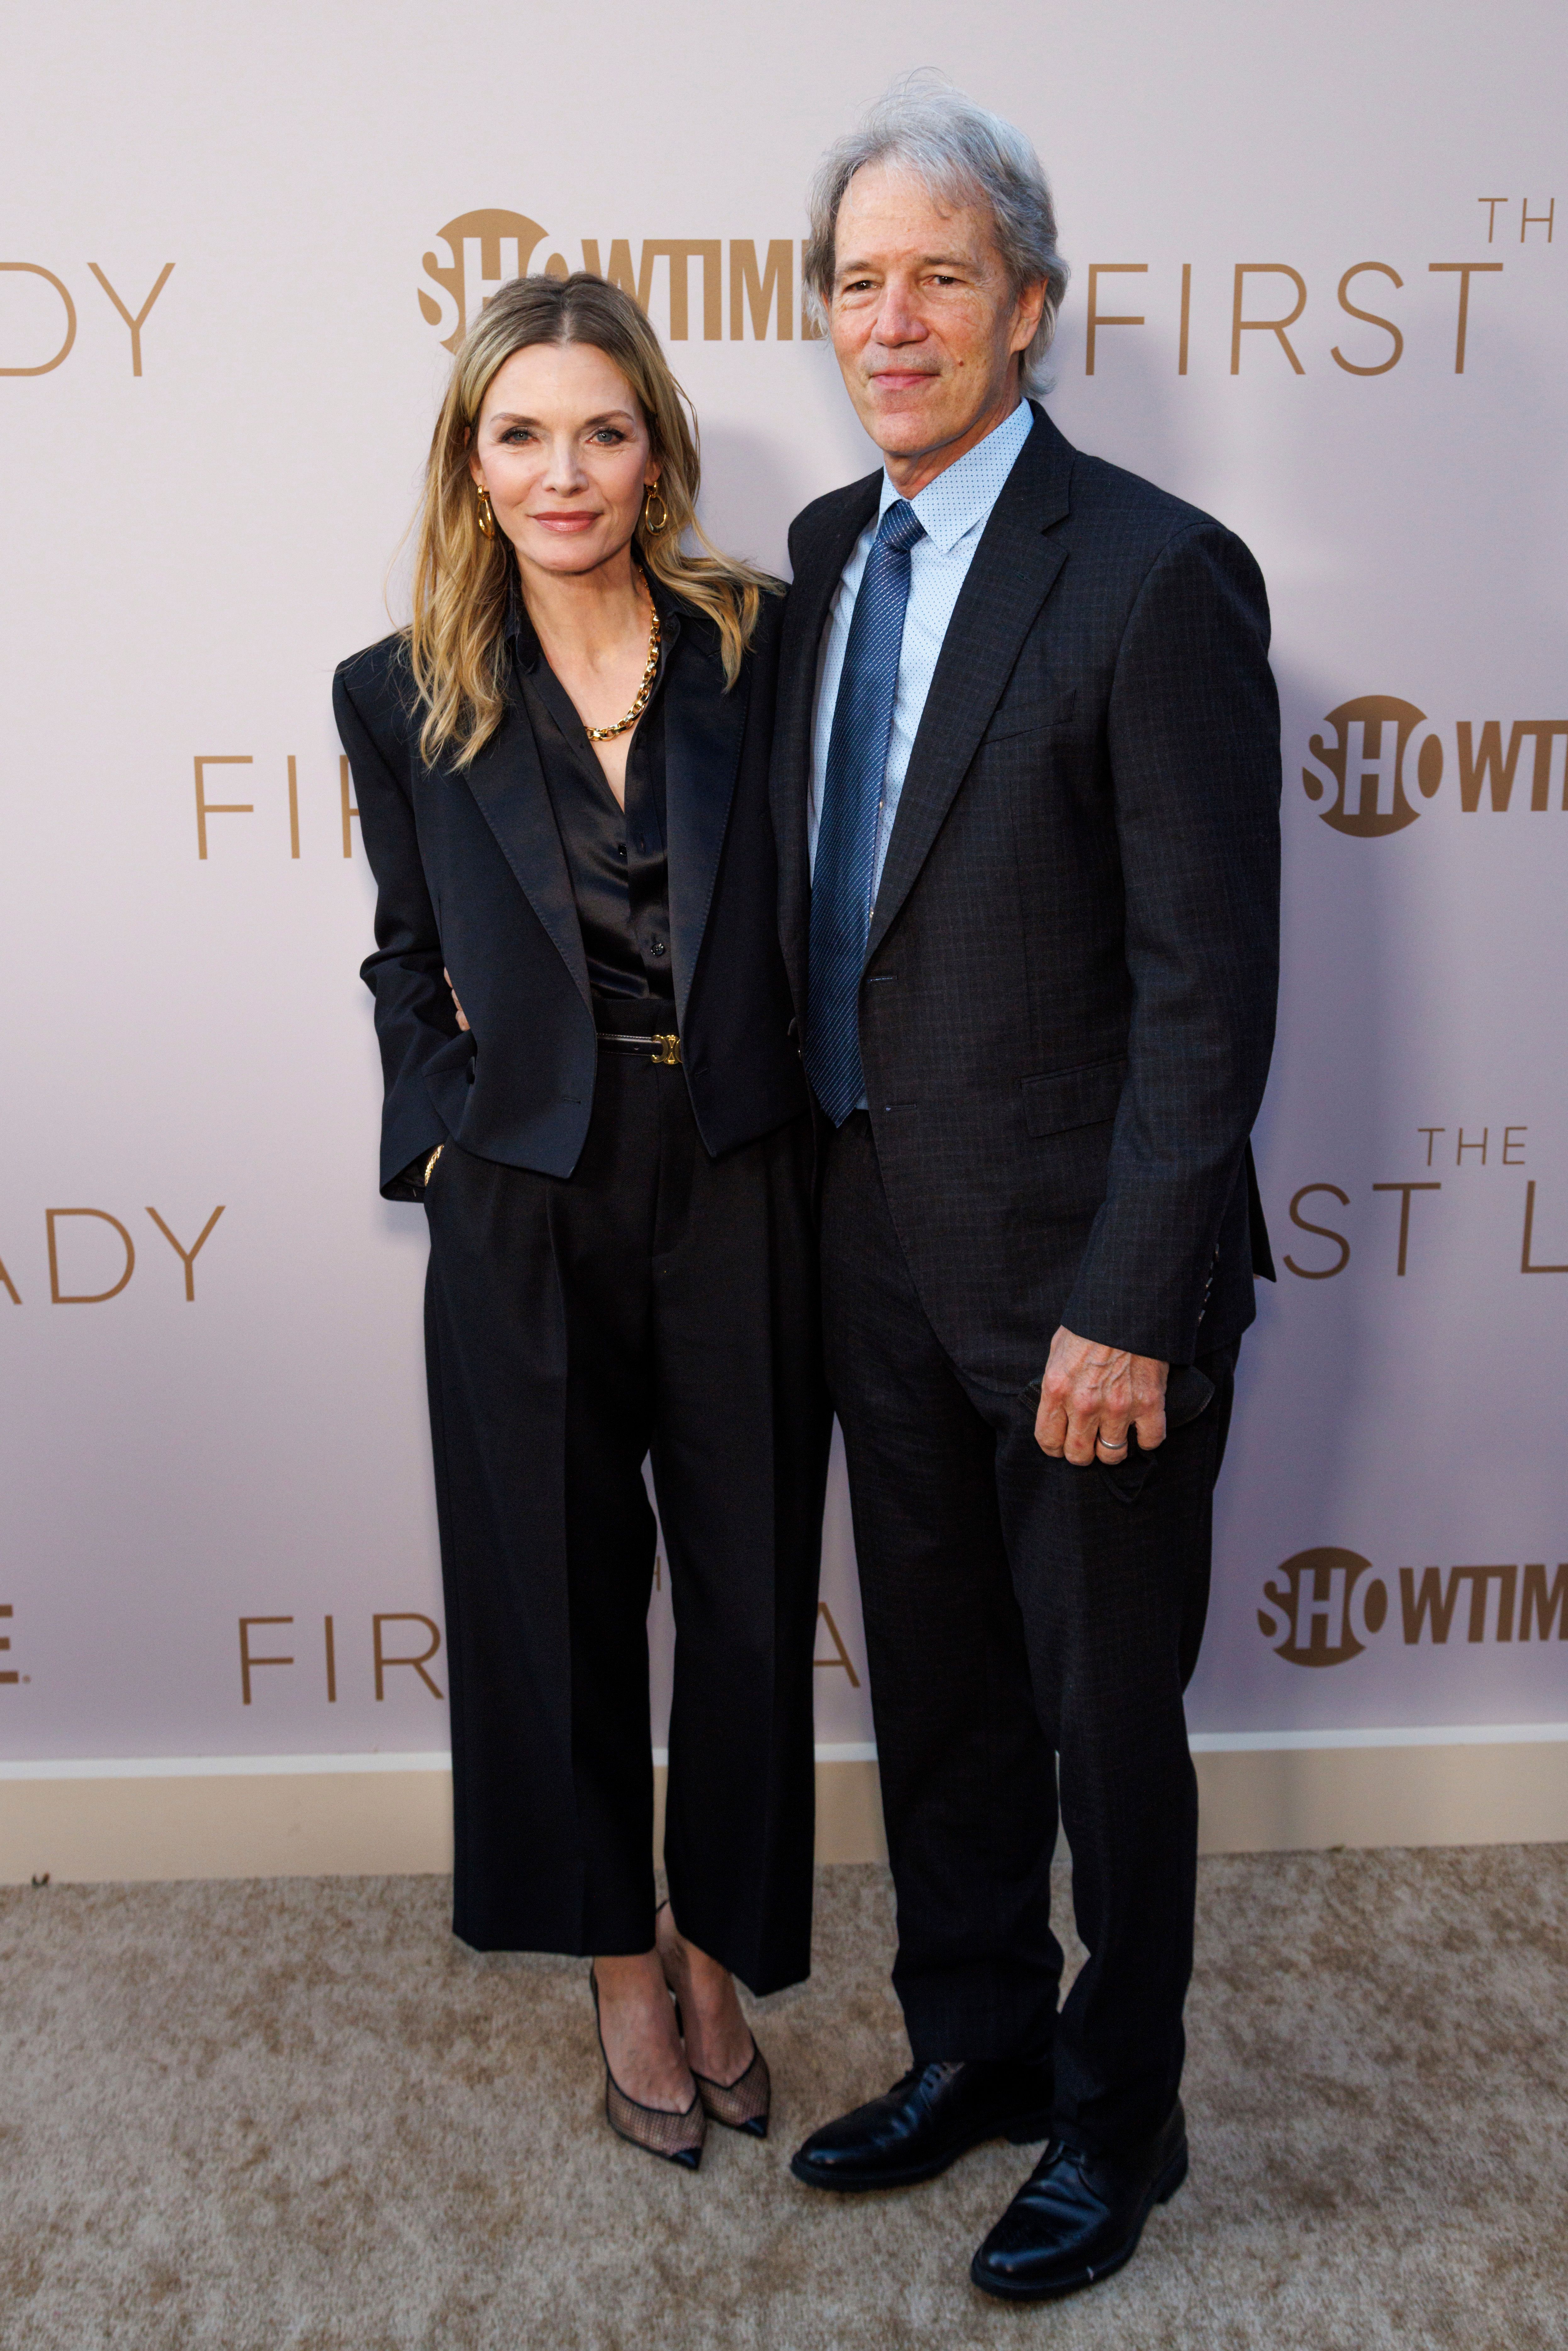 Michelle Pfeiffer’s Husband David E. Kelley Red Carpet Photos Closer